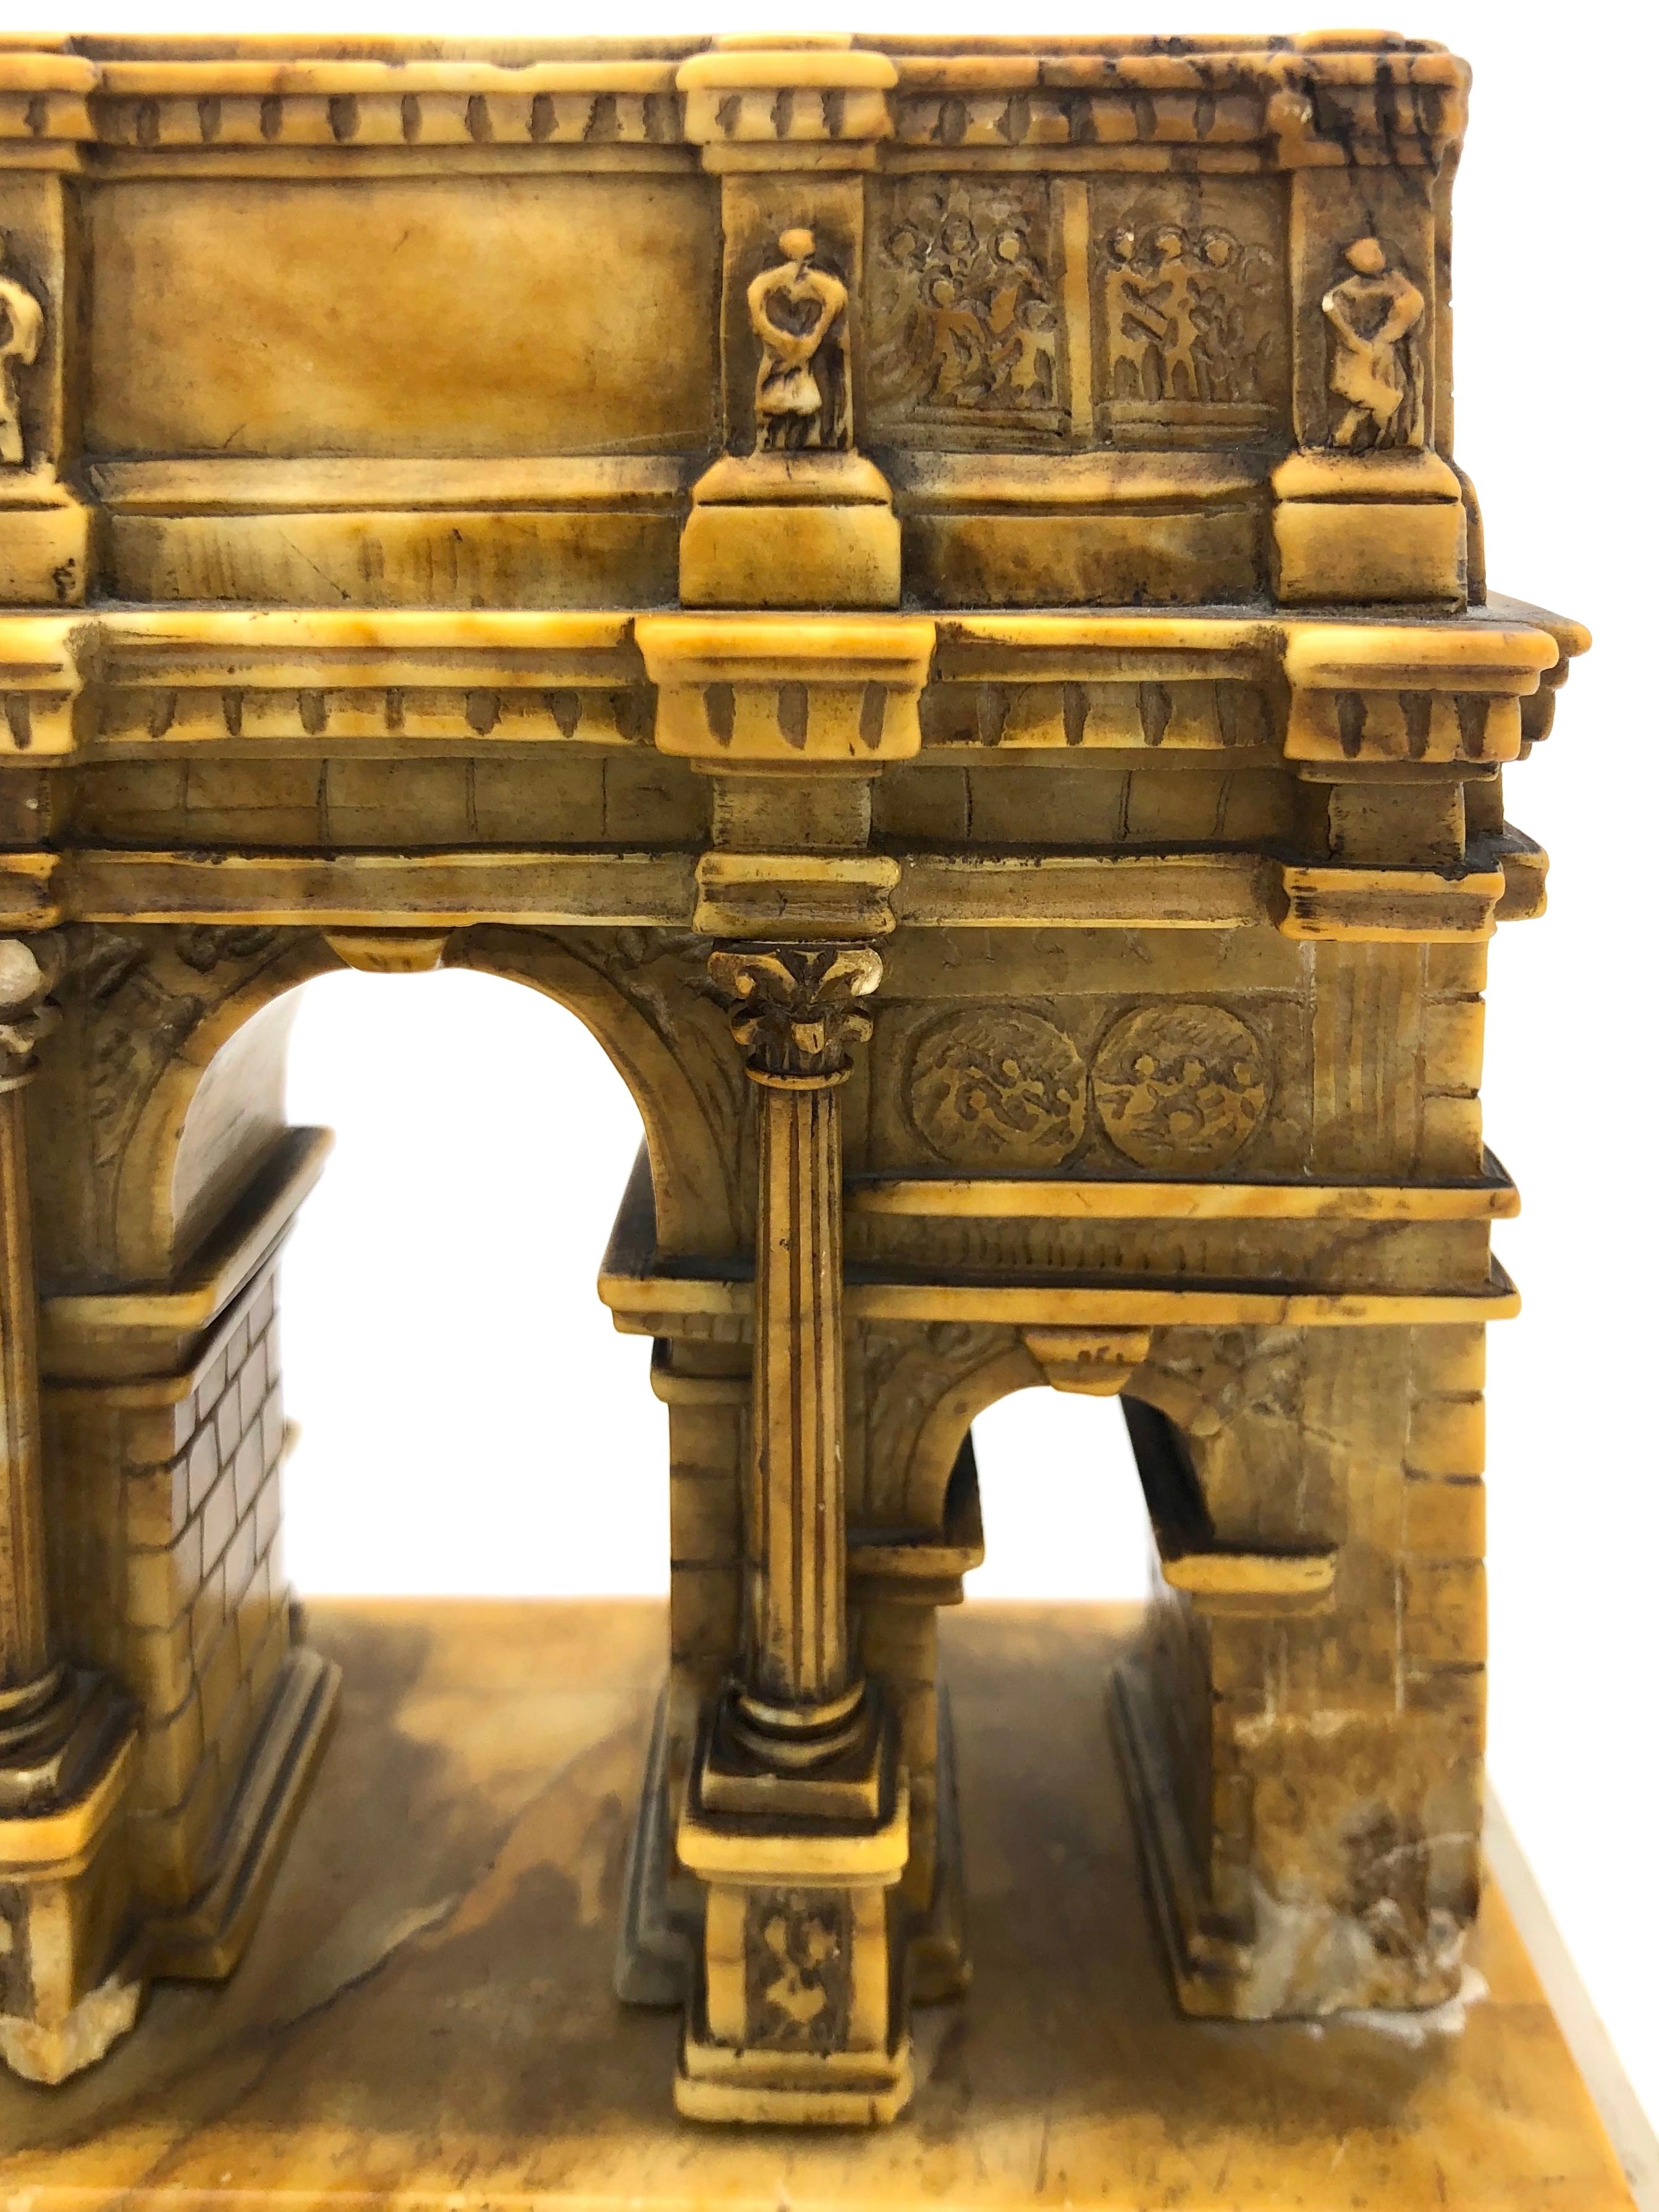 Antique Grand Tour Arch of Constantine's Triumph Miniature Architecture Model 5